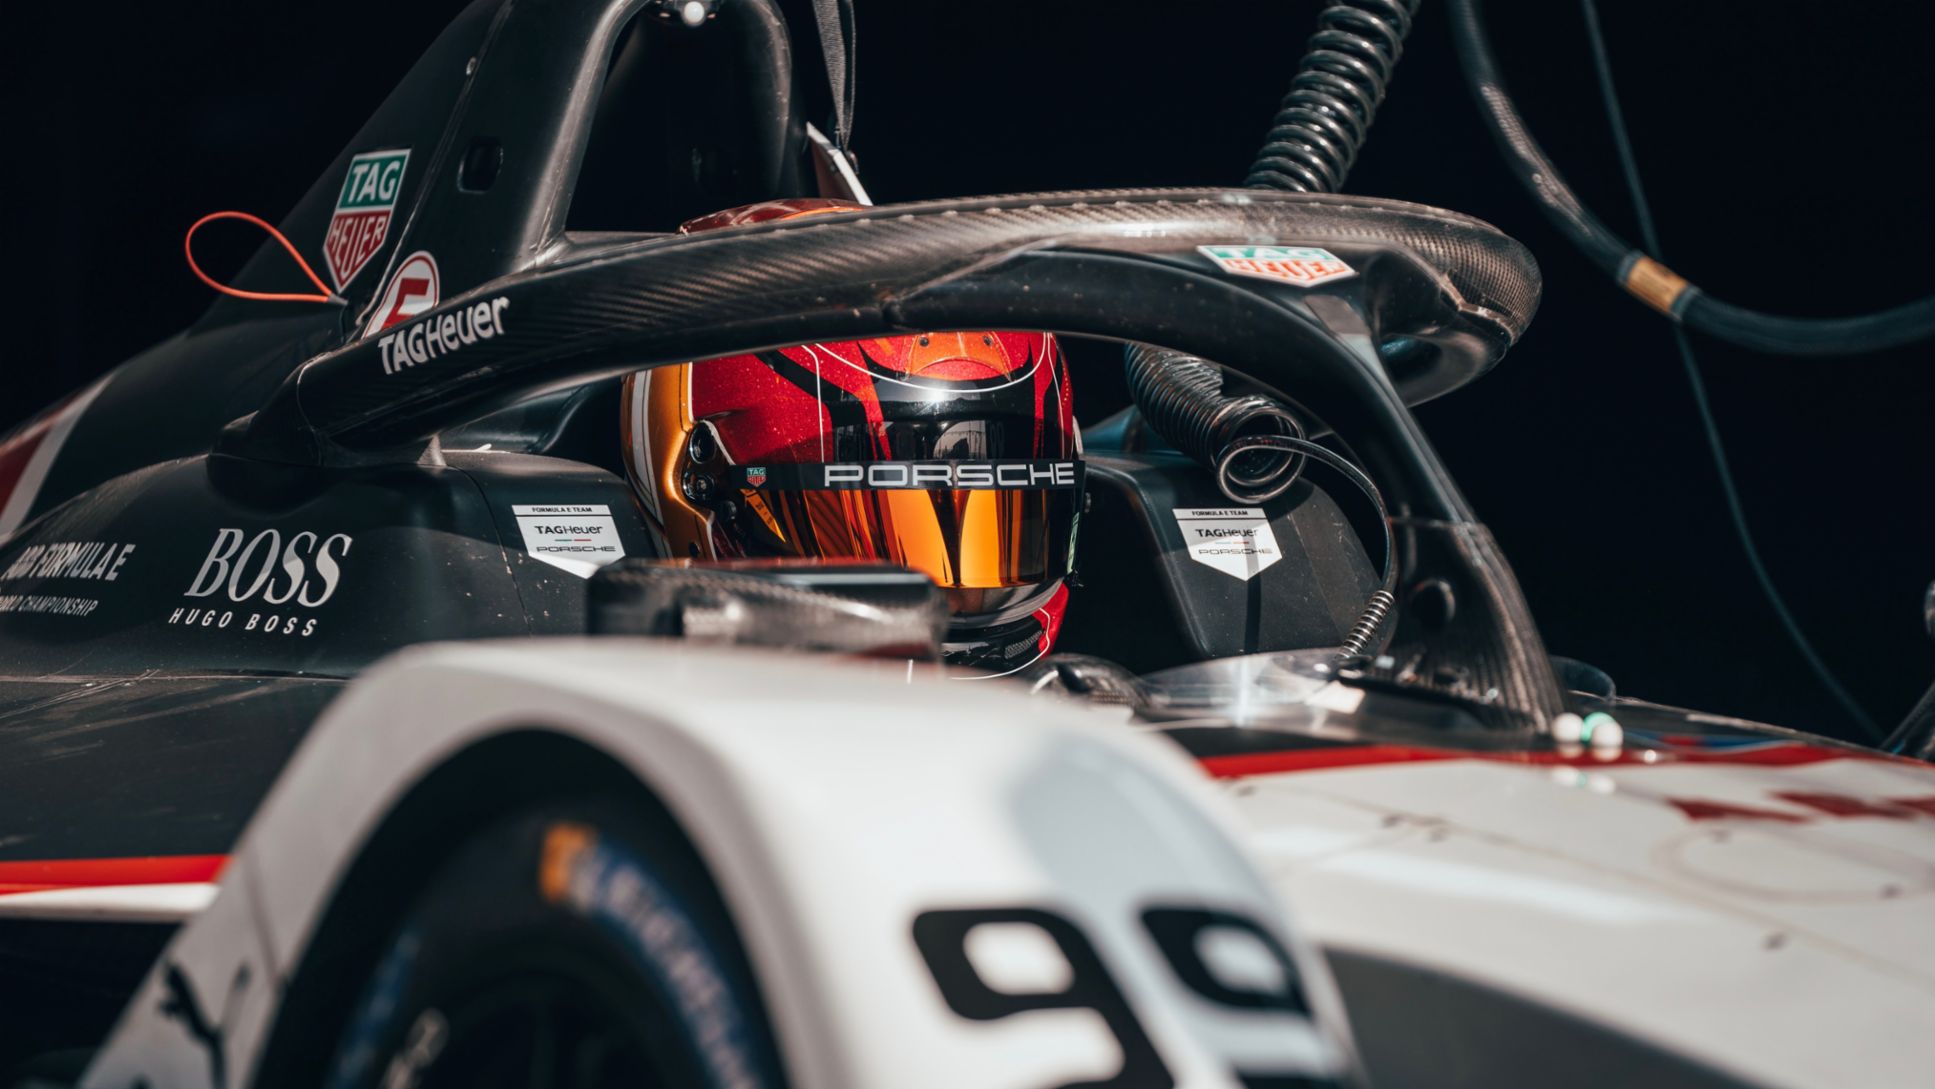 99X Electric (nº 99), Pascal Wehrlein, Fórmula E, E-Prix de Diriyah, carrera 2, 2021, Porsche AG